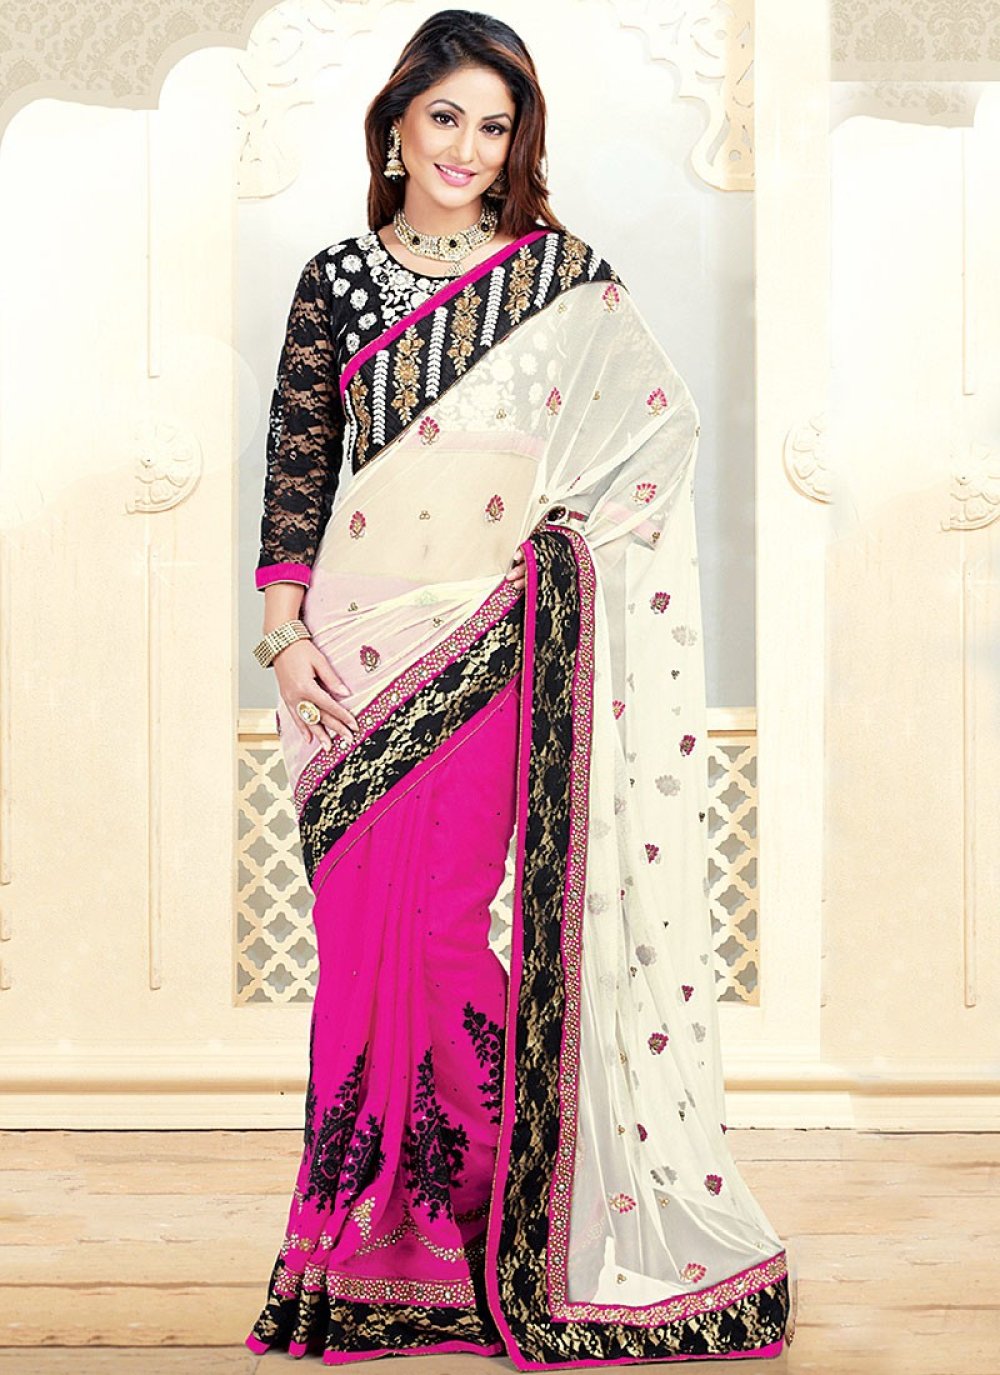 Top more than 71 akshara saree blouse designs best